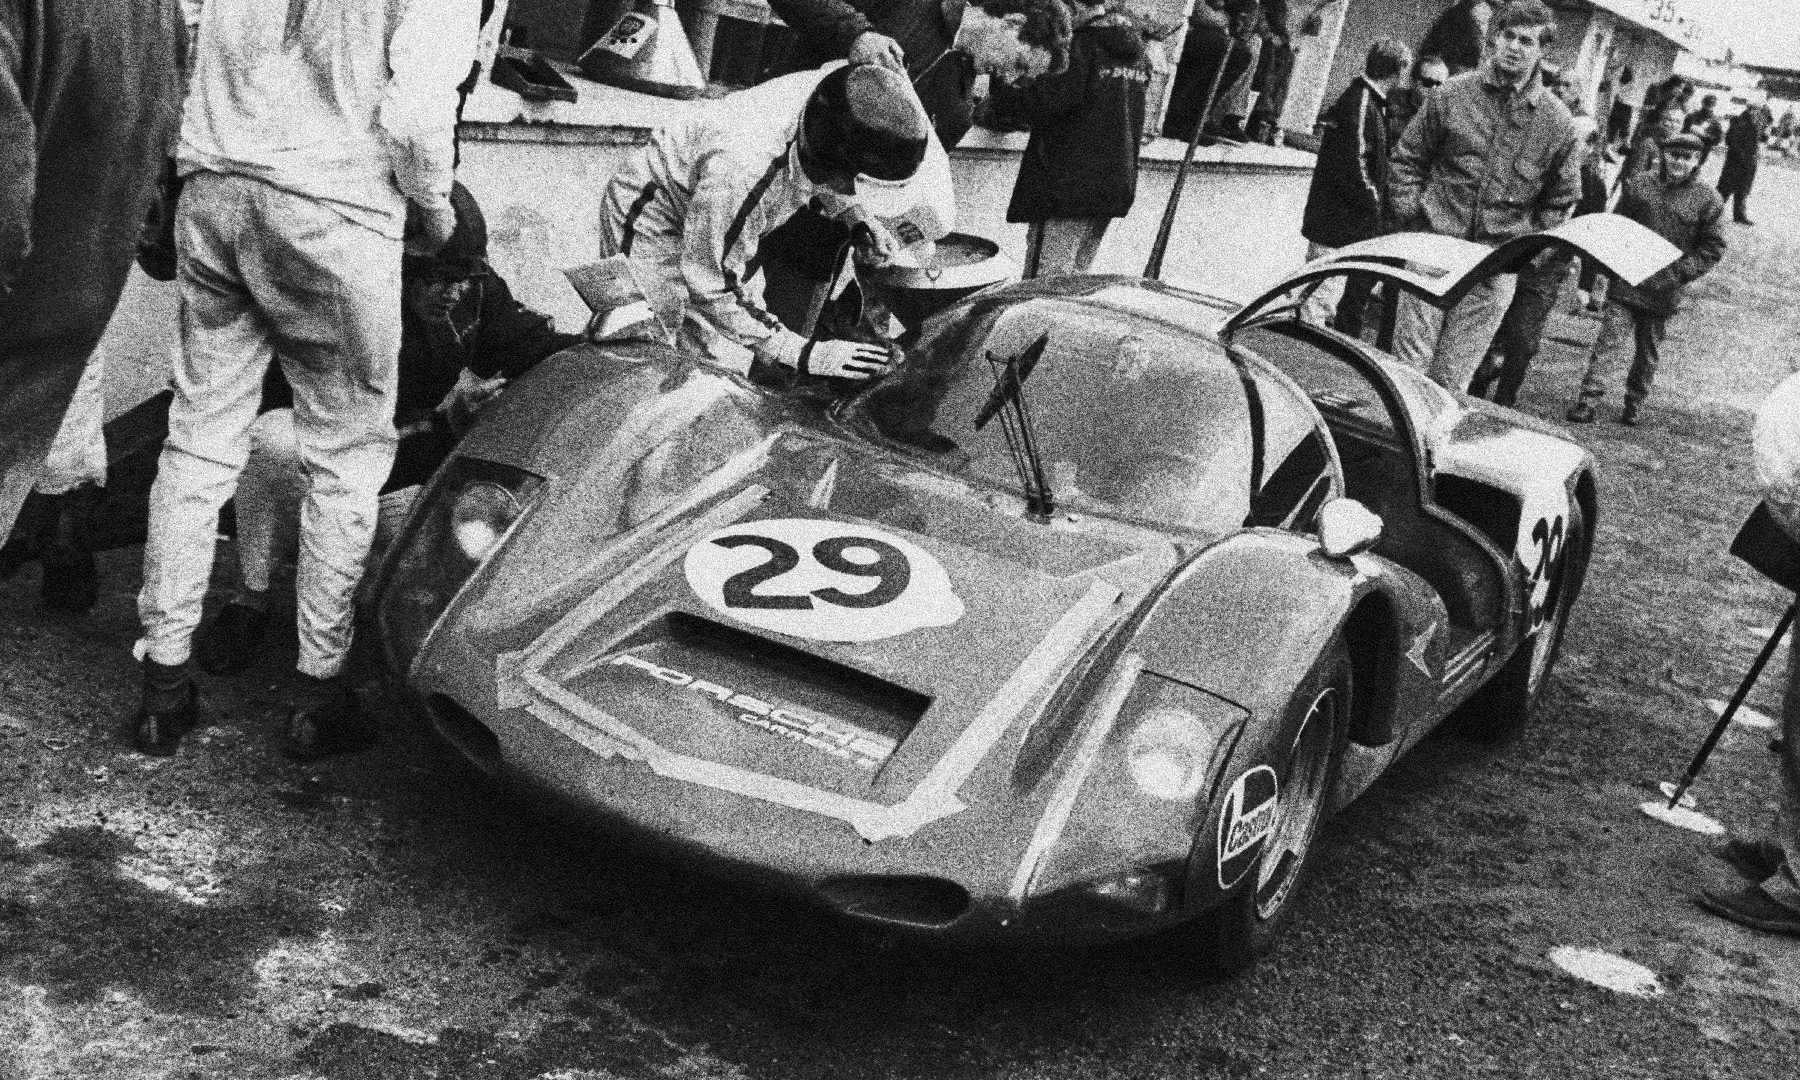 Classic Porsche restoration and Porsche Historic Racing specialists